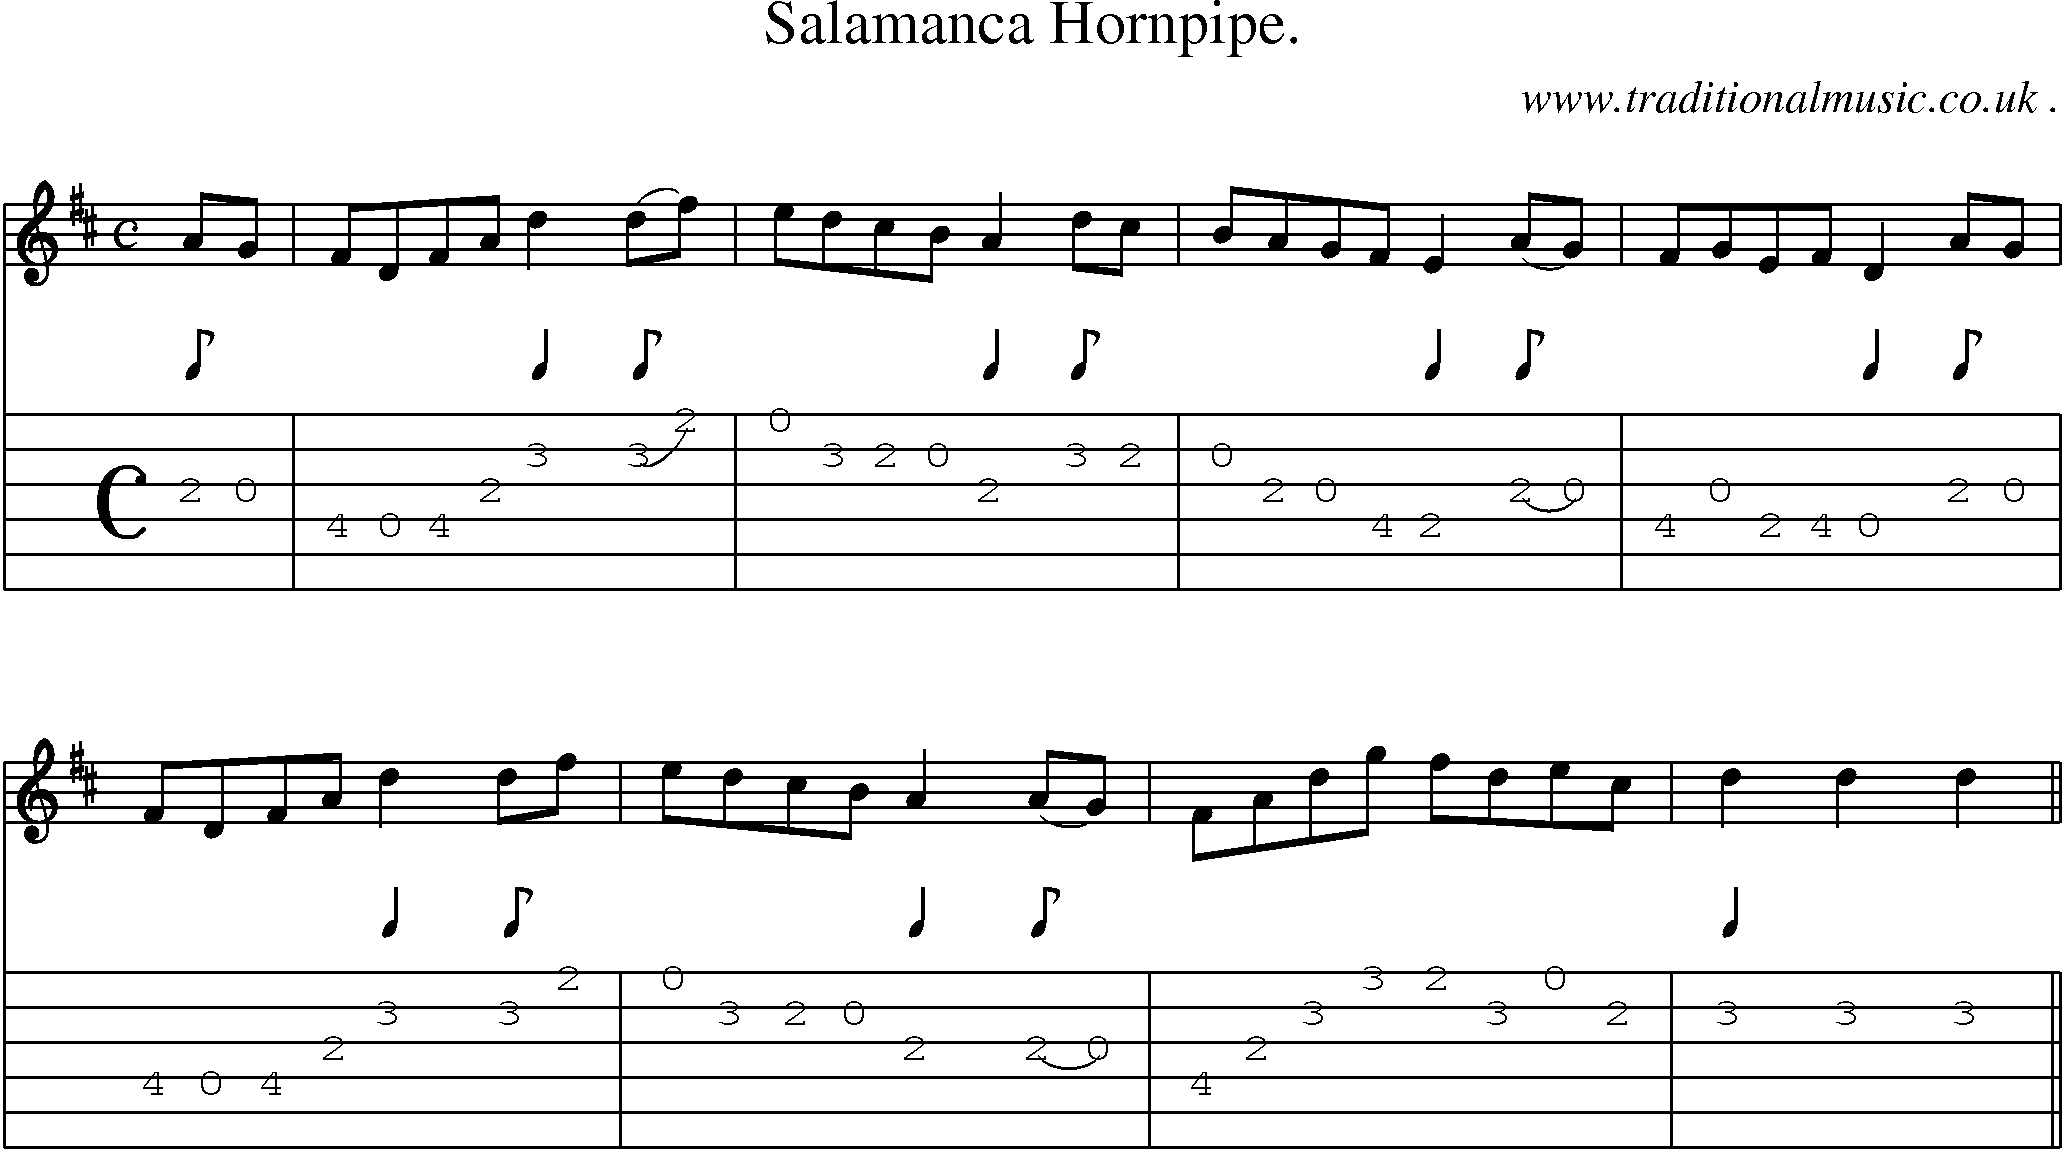 Sheet-Music and Guitar Tabs for Salamanca Hornpipe